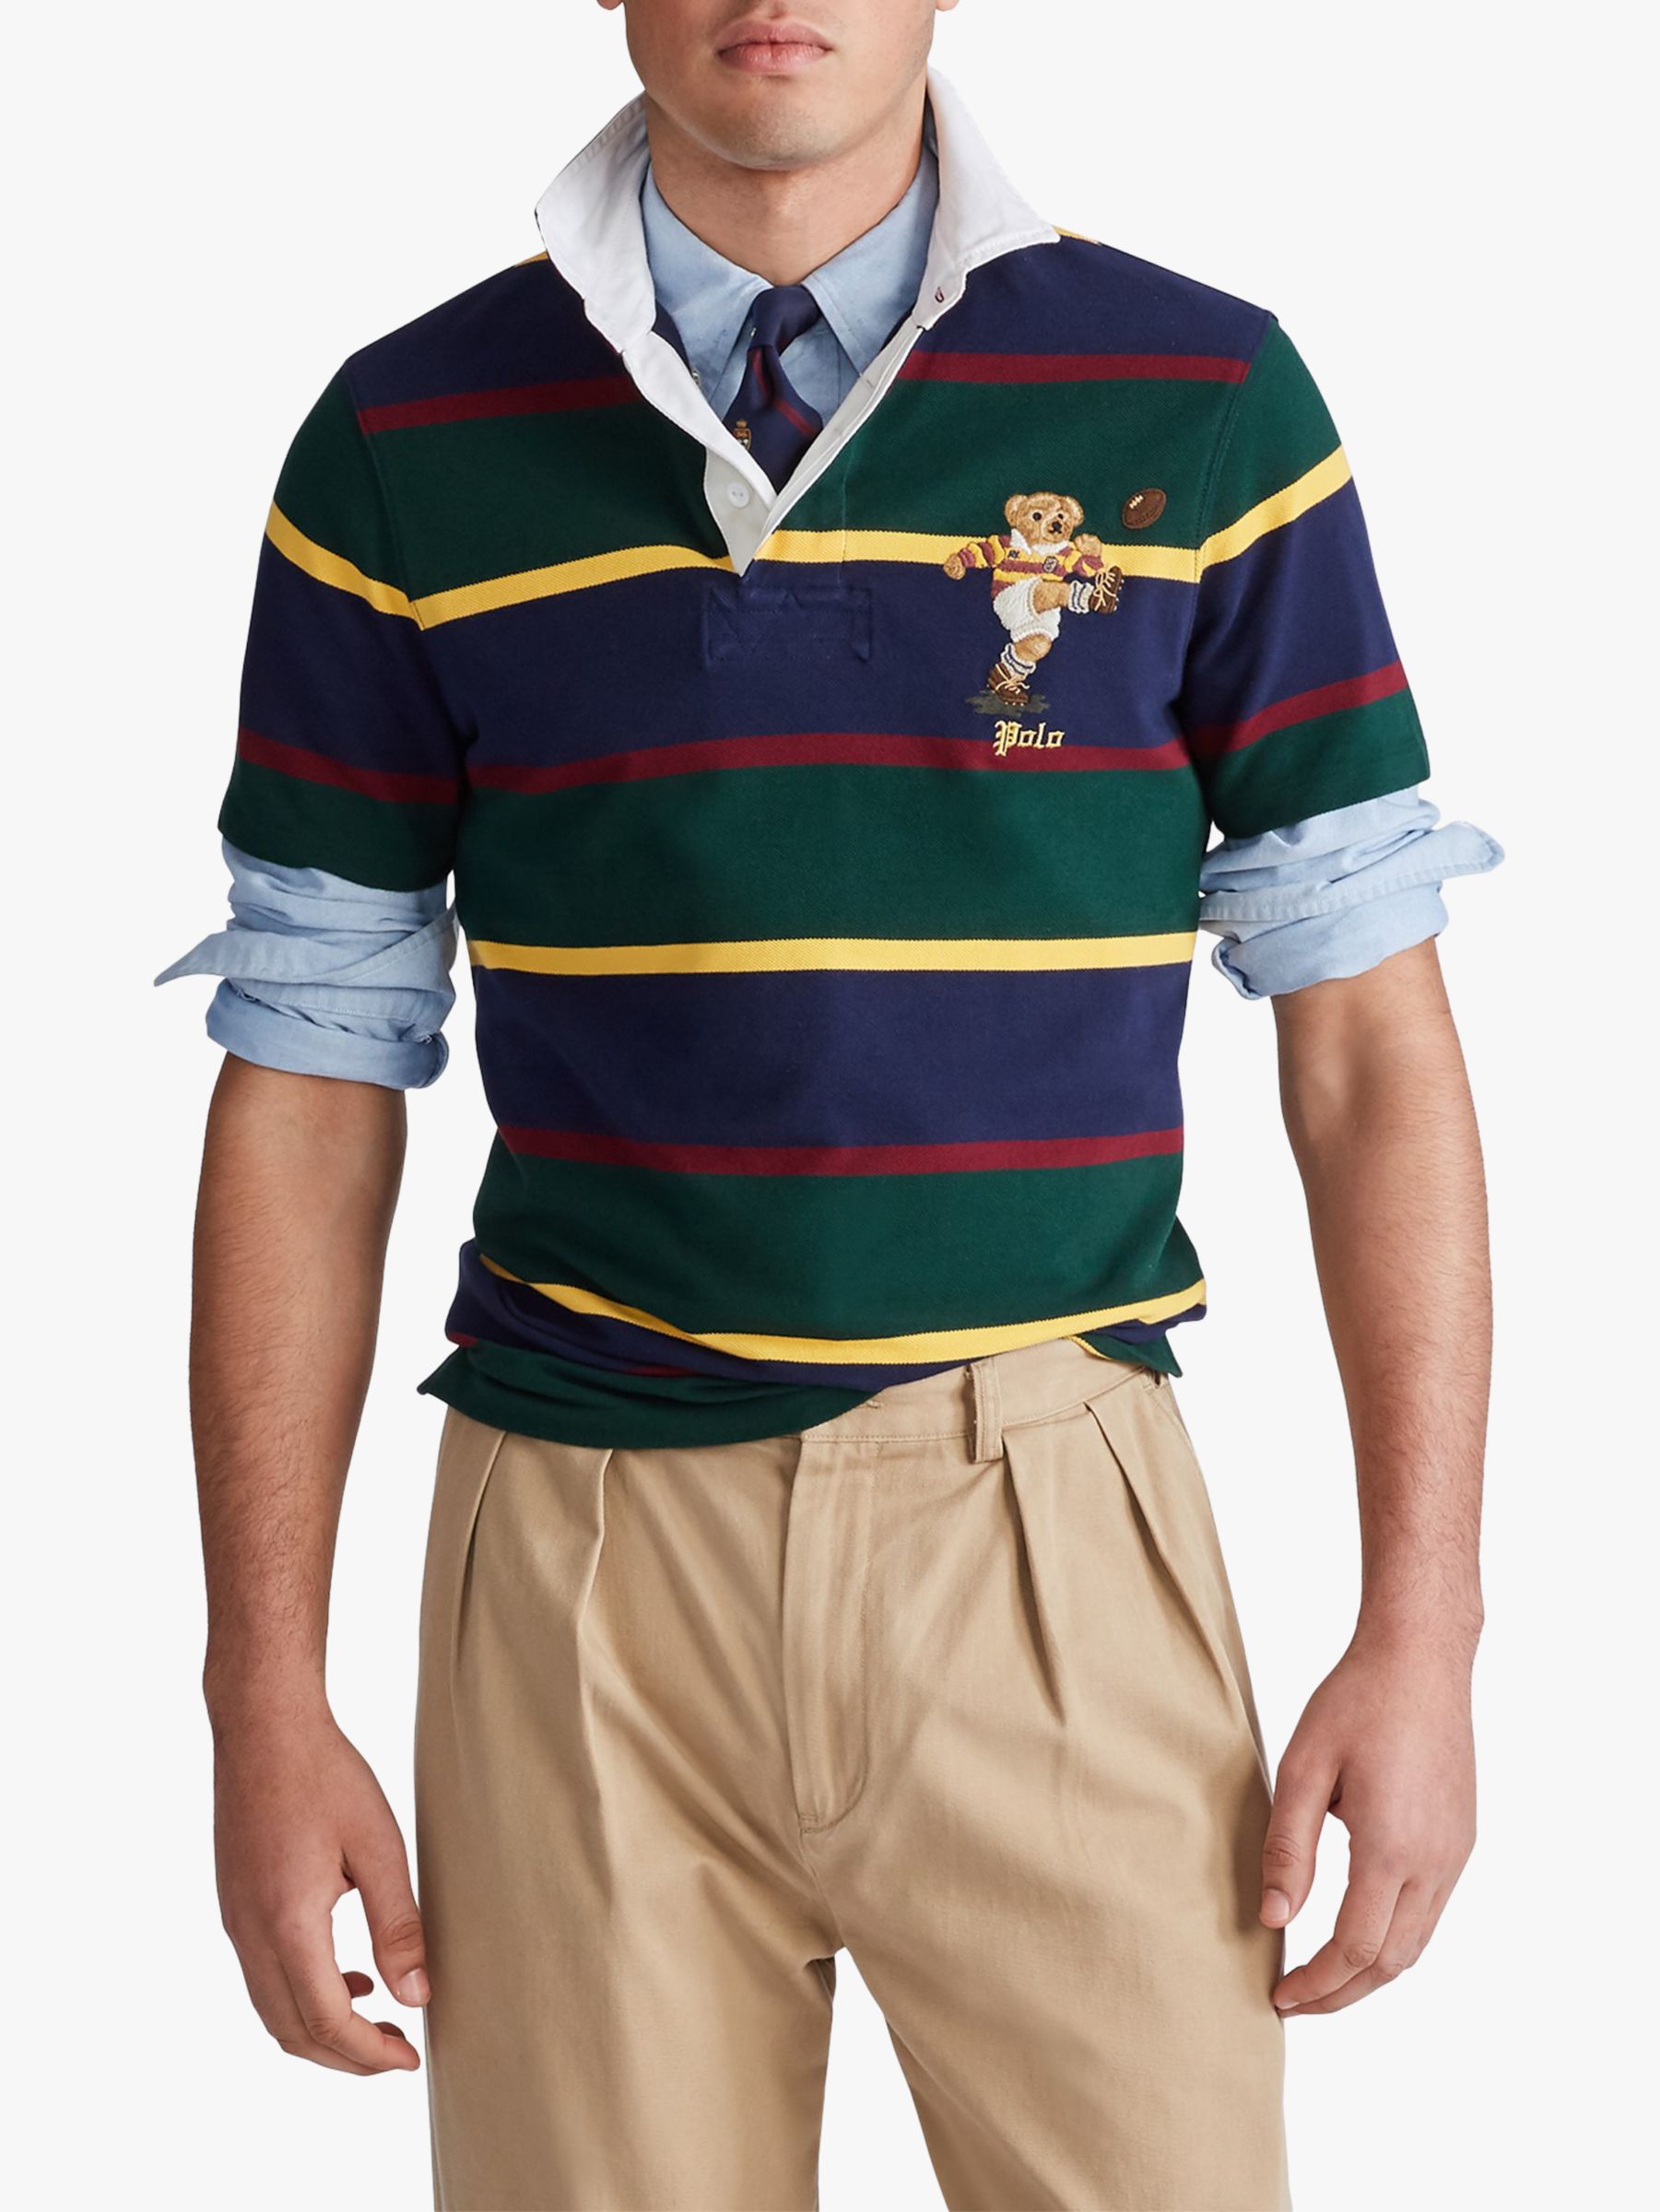 men's polo ralph lauren rugby shirts